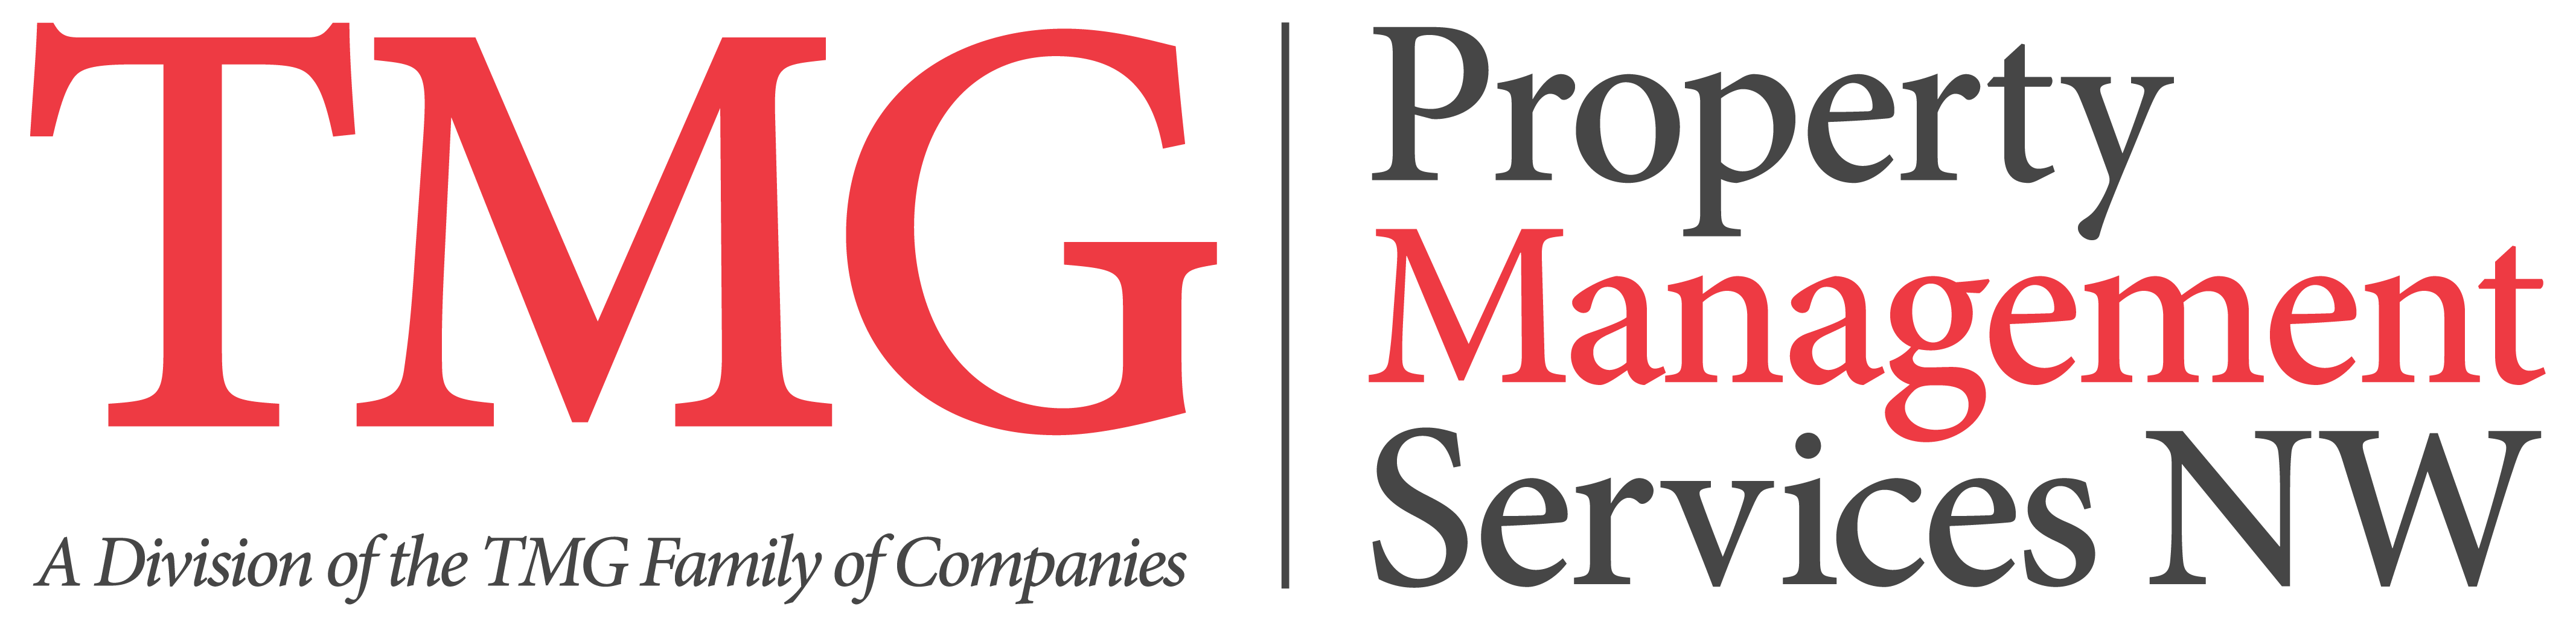 TMG PMS Logo_Full logo - red and black